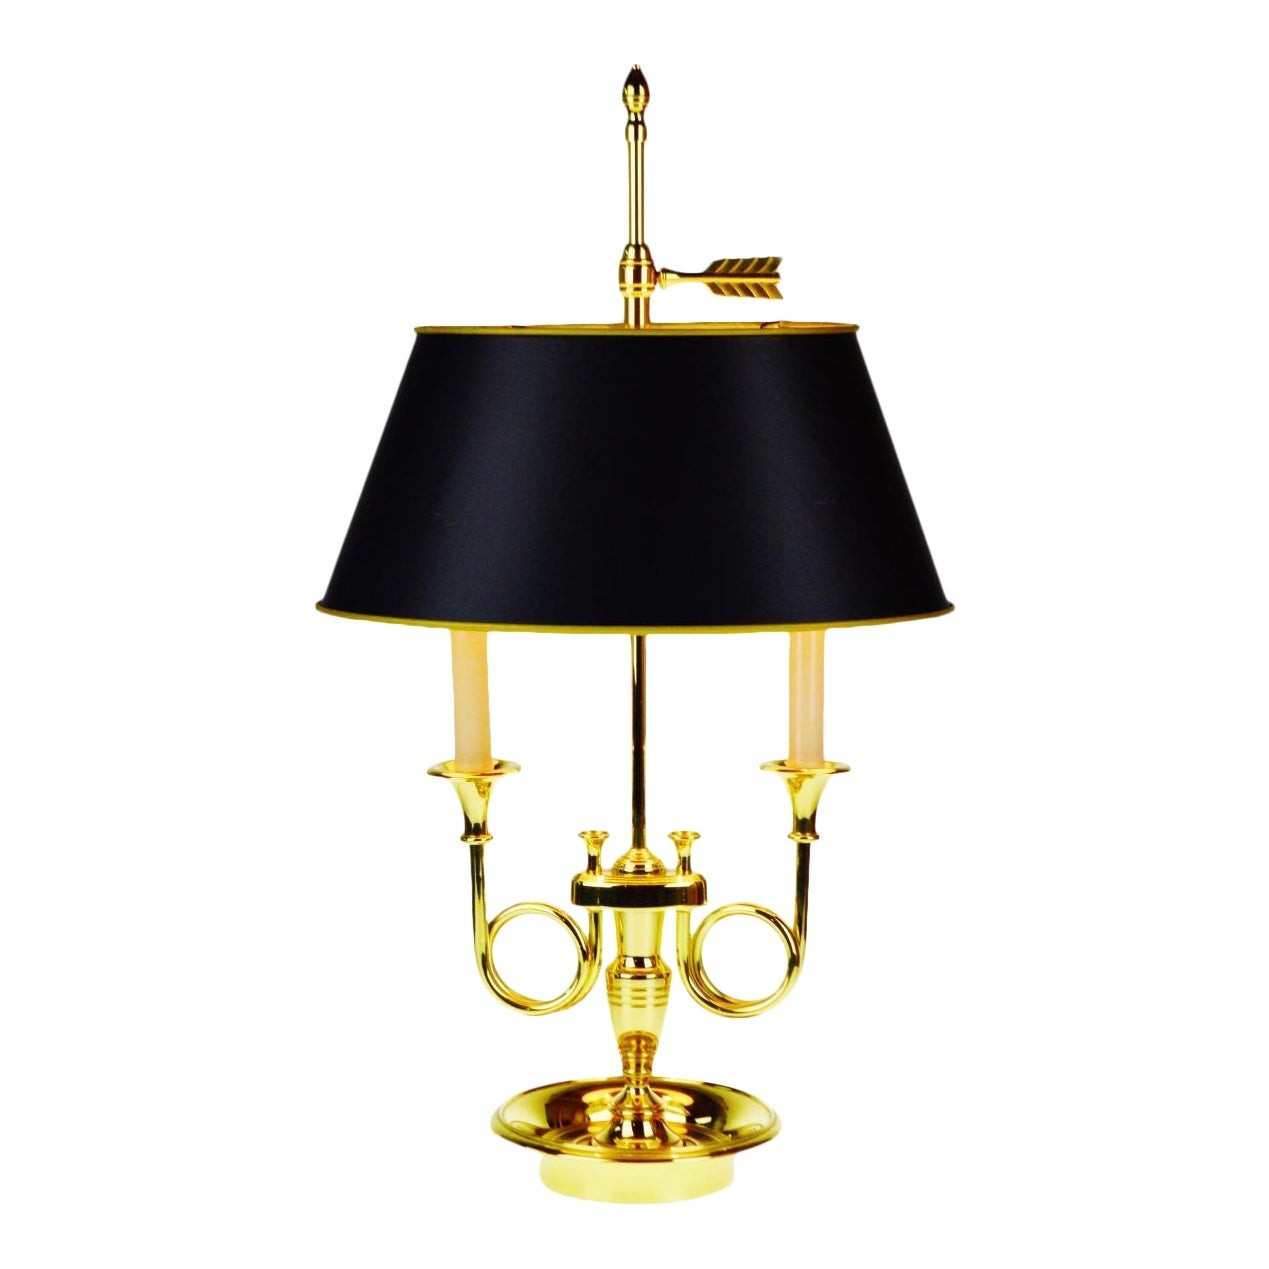 Vintage baldwin brass candlestick table lamp chairish